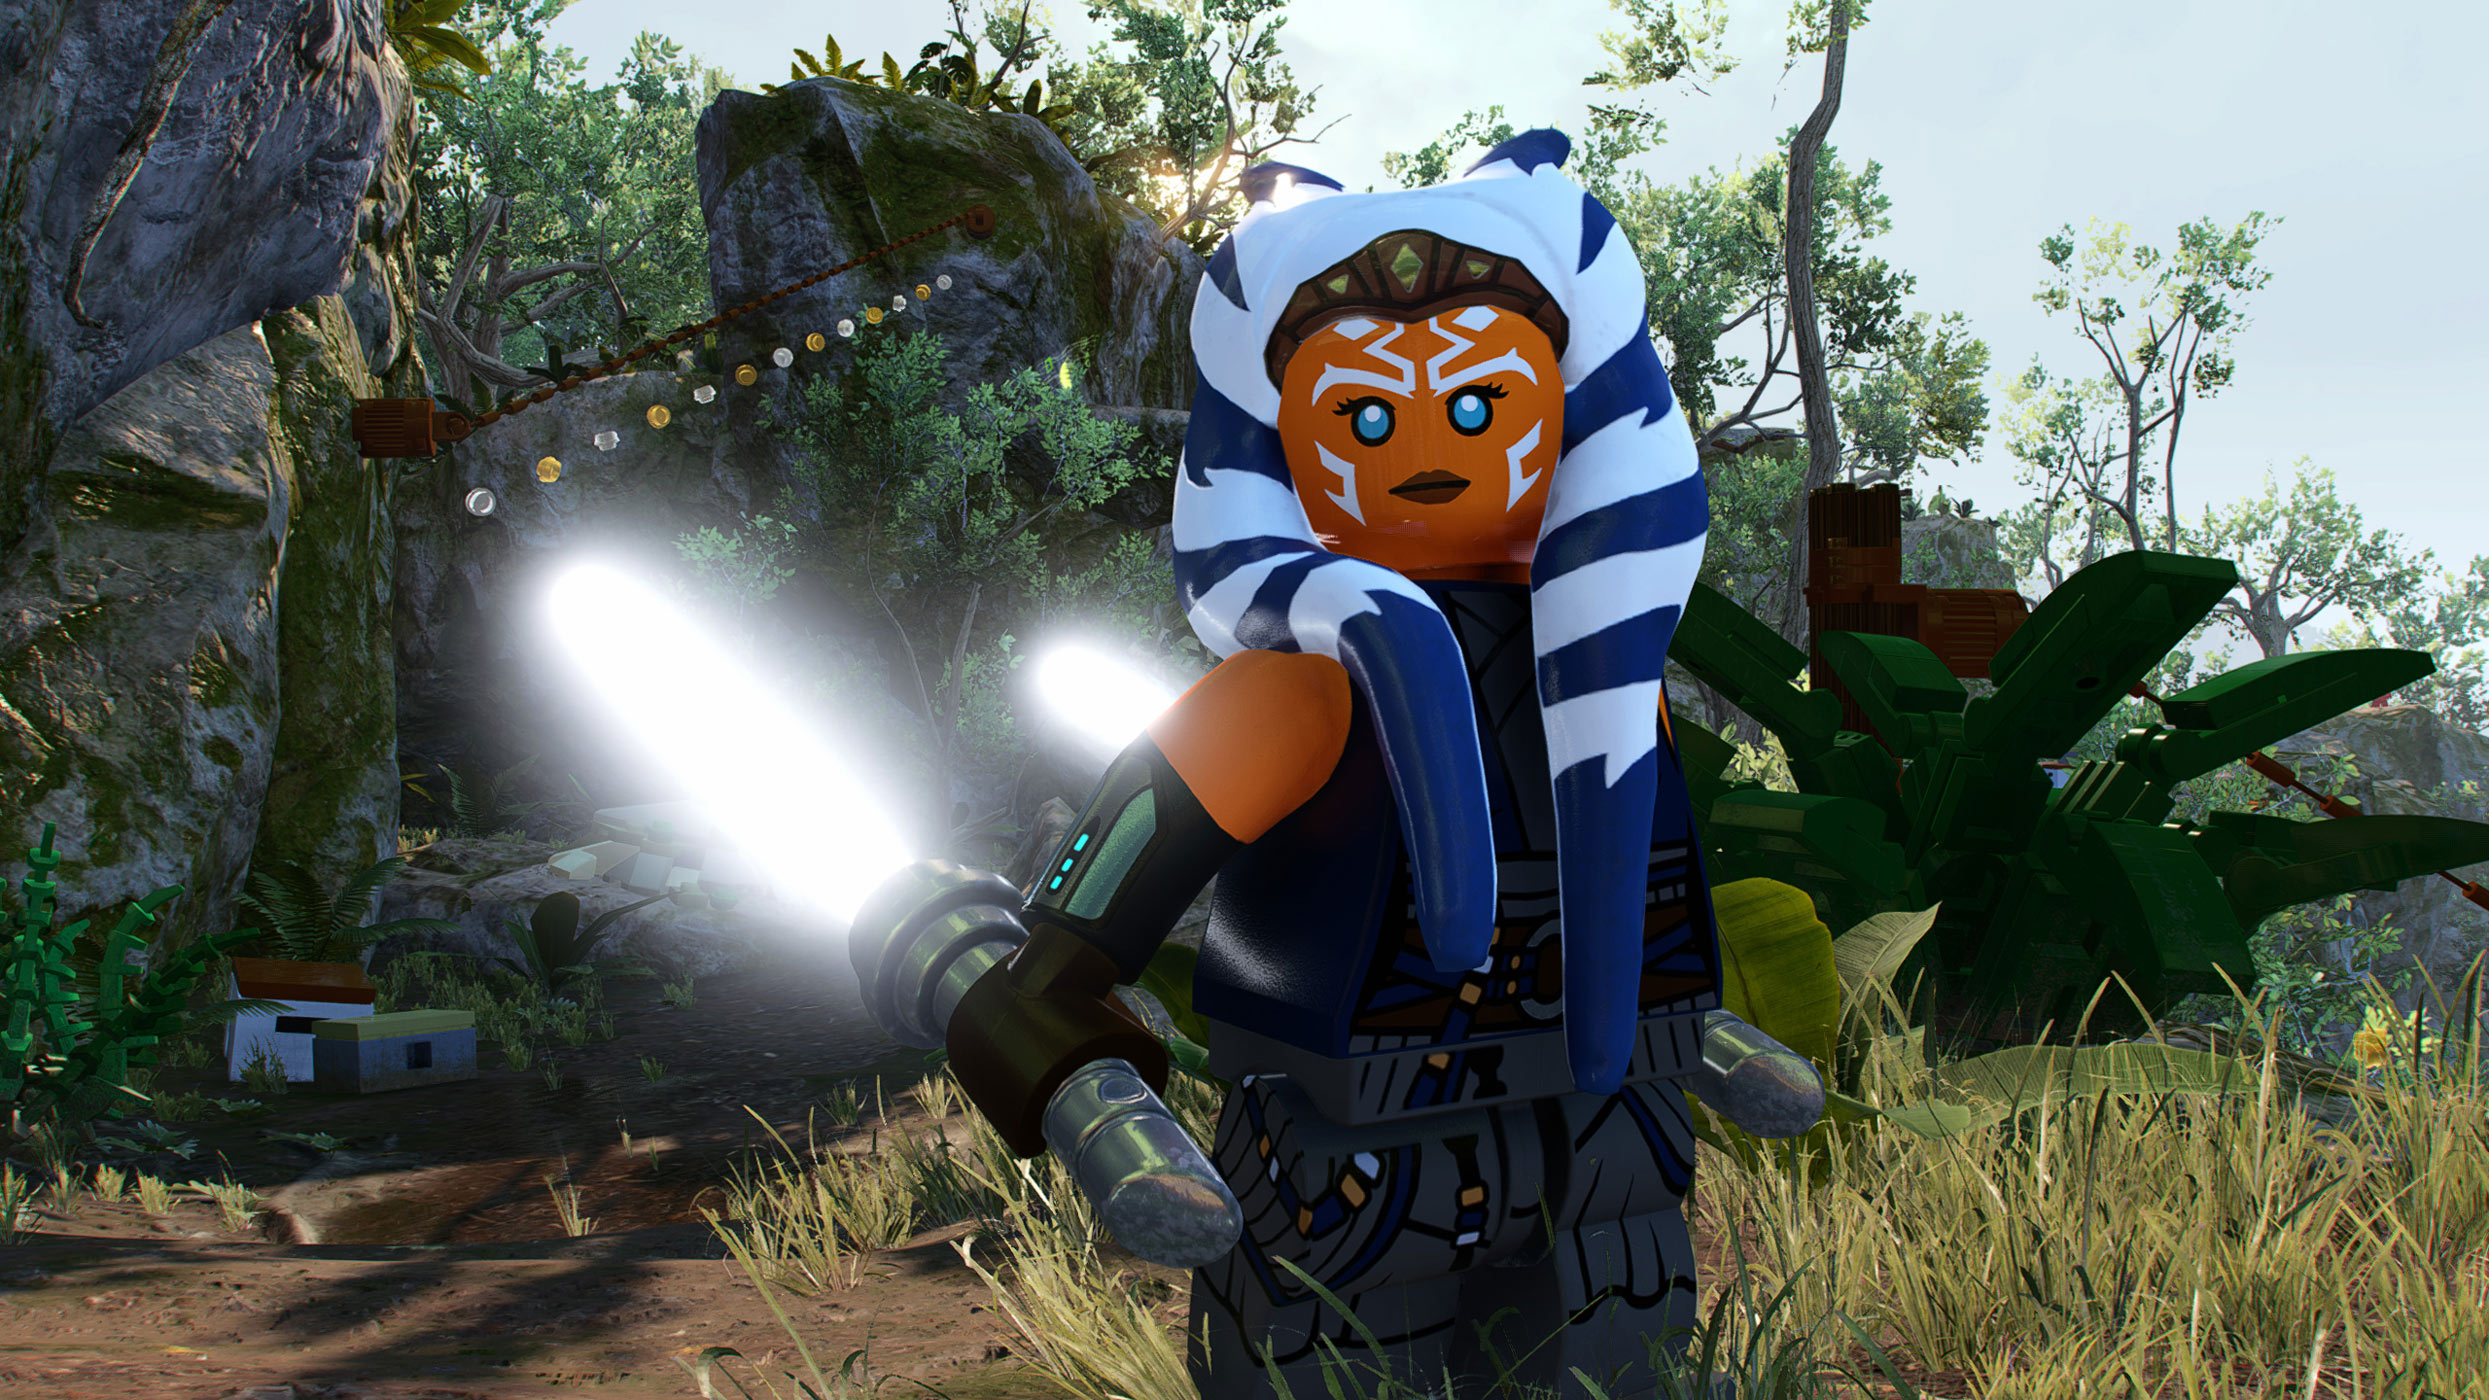 Lego Star Wars A Saga Skywalker - Xbox - Warner Bros. - Jogos de